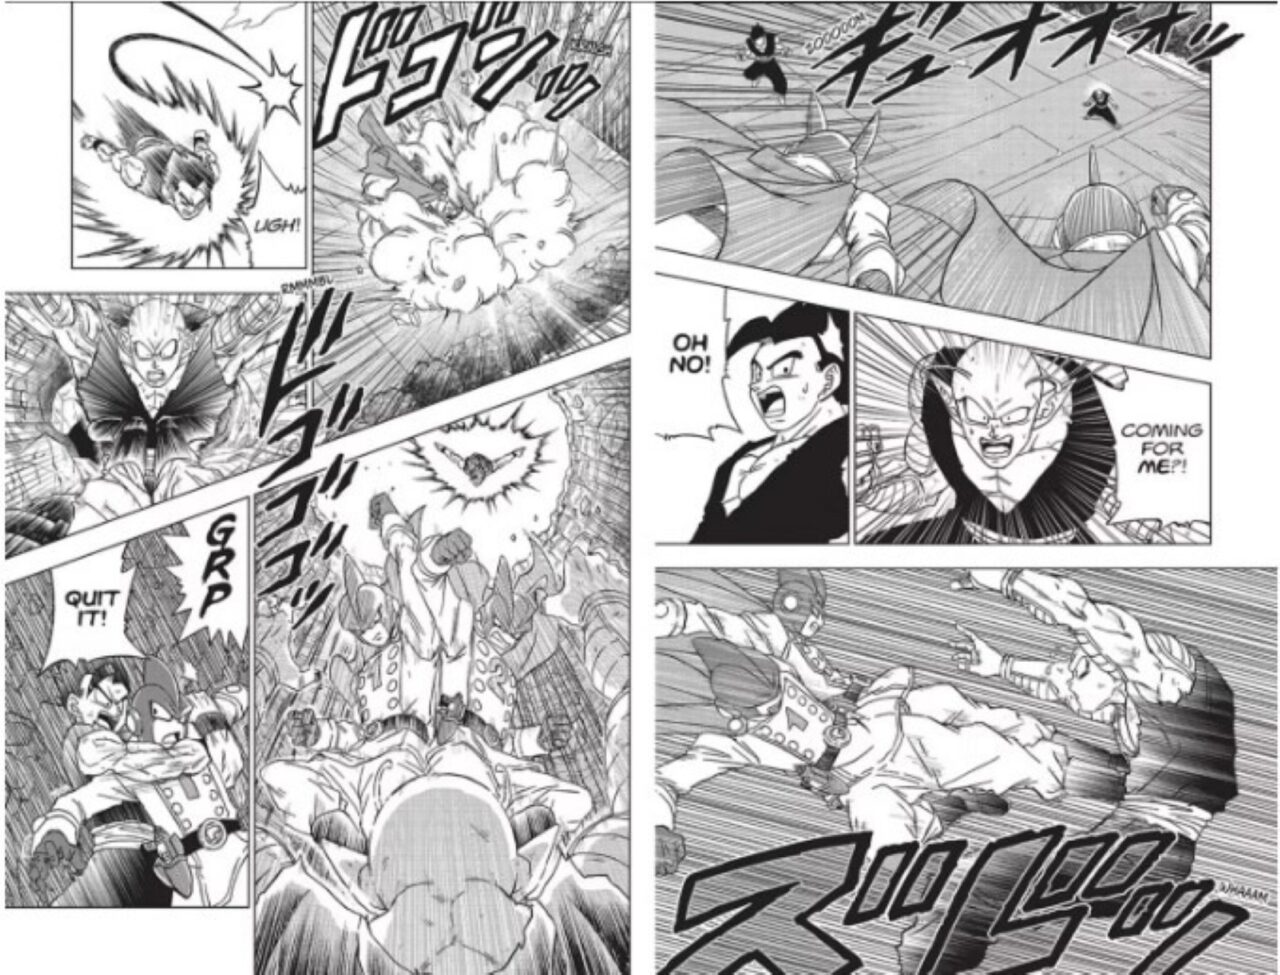 Dragon Ball Super finalmente corrige um erro crucial relacionado a Piccolo